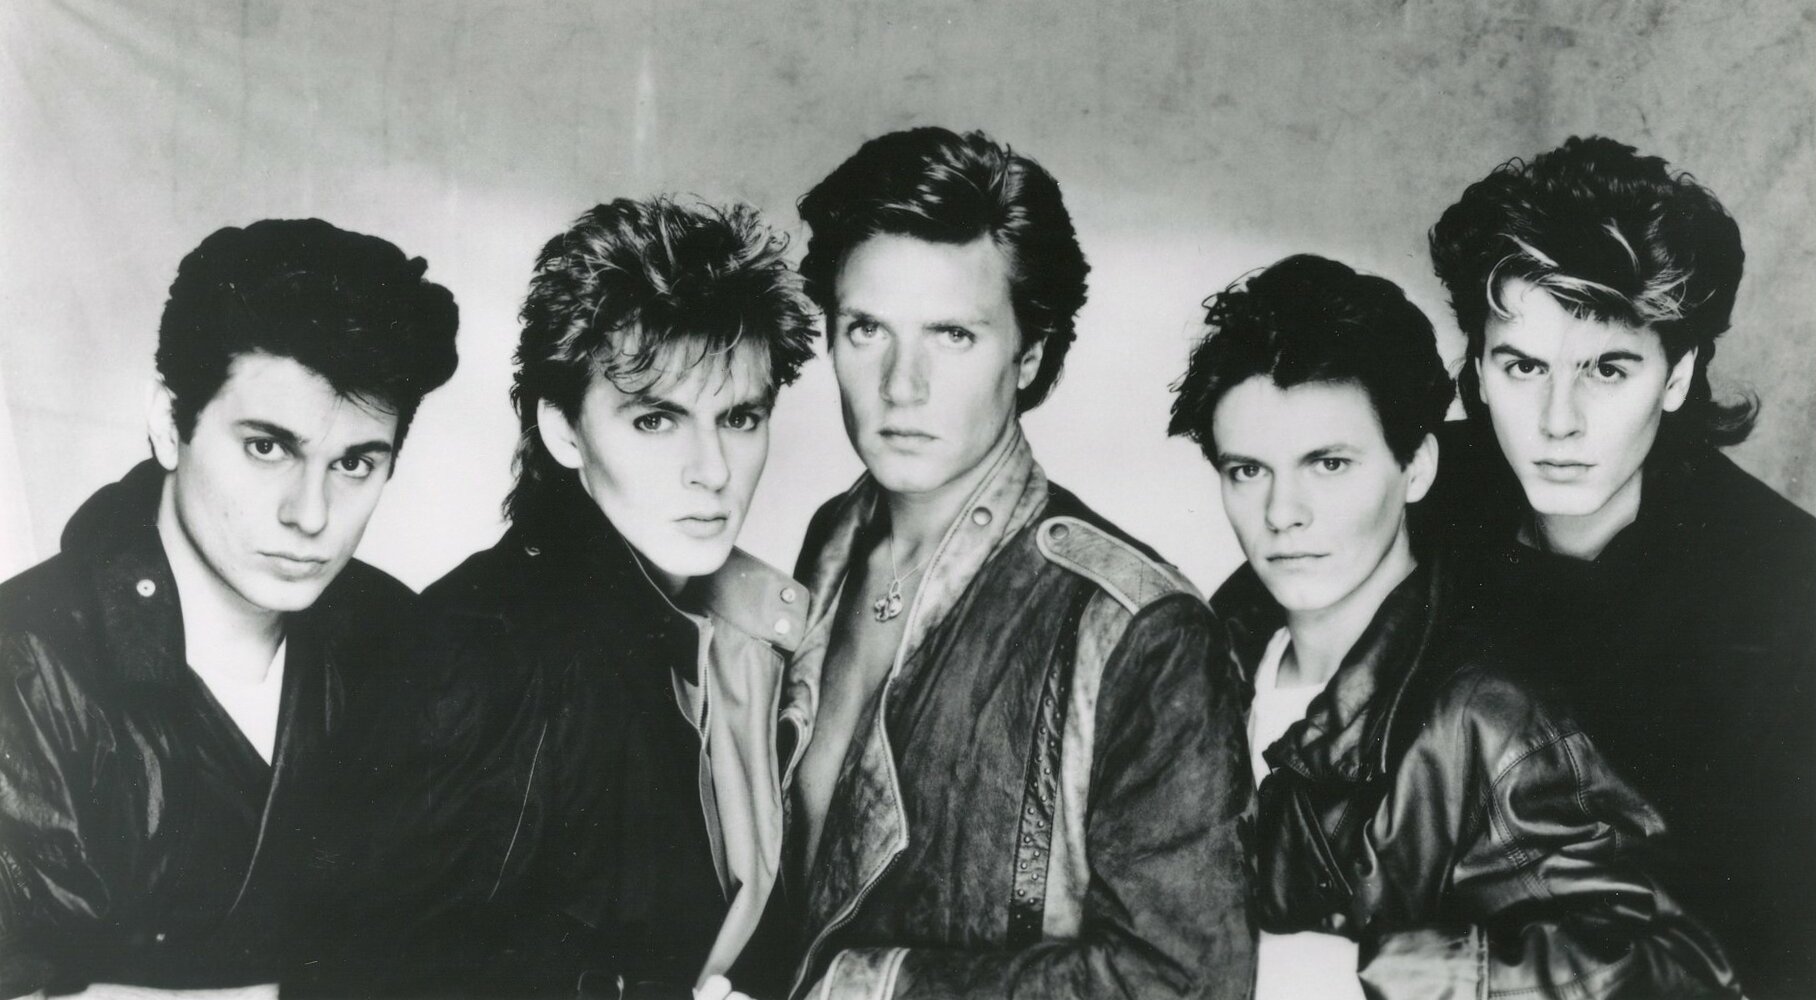 Ordinary World Song, Duran Duran, Greatest